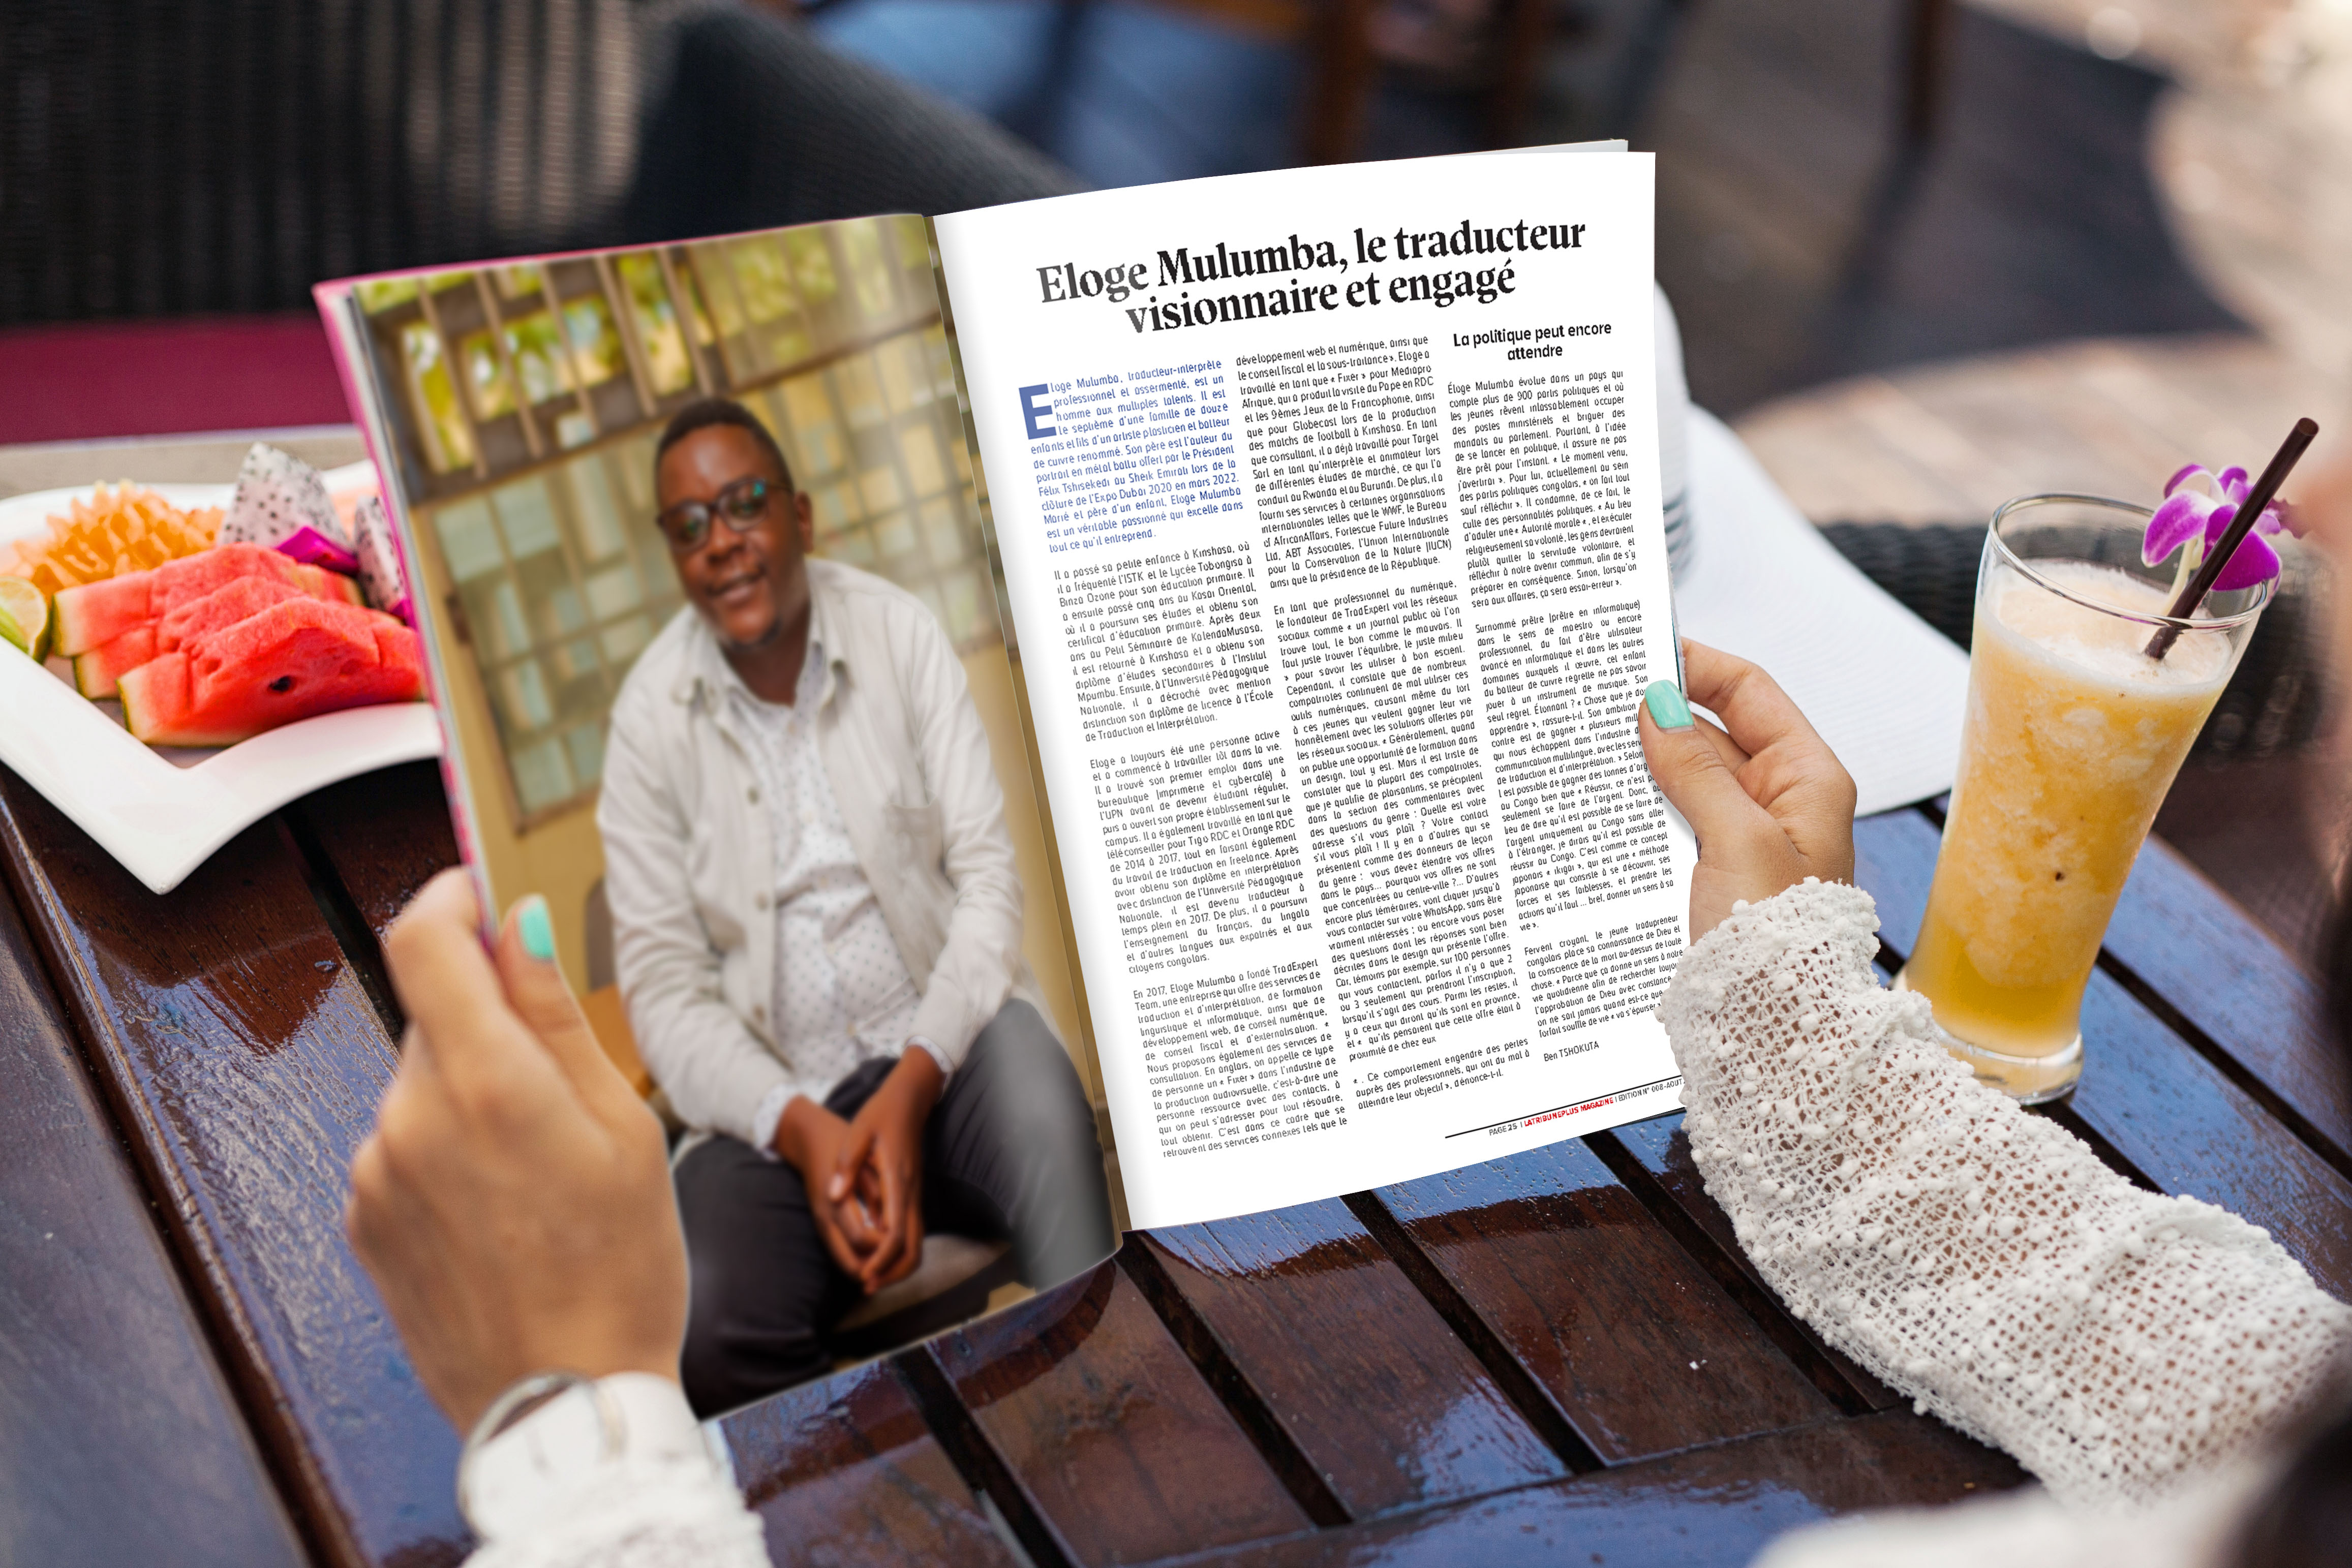 Eloge Mulumba, the visionary and dedicated translator